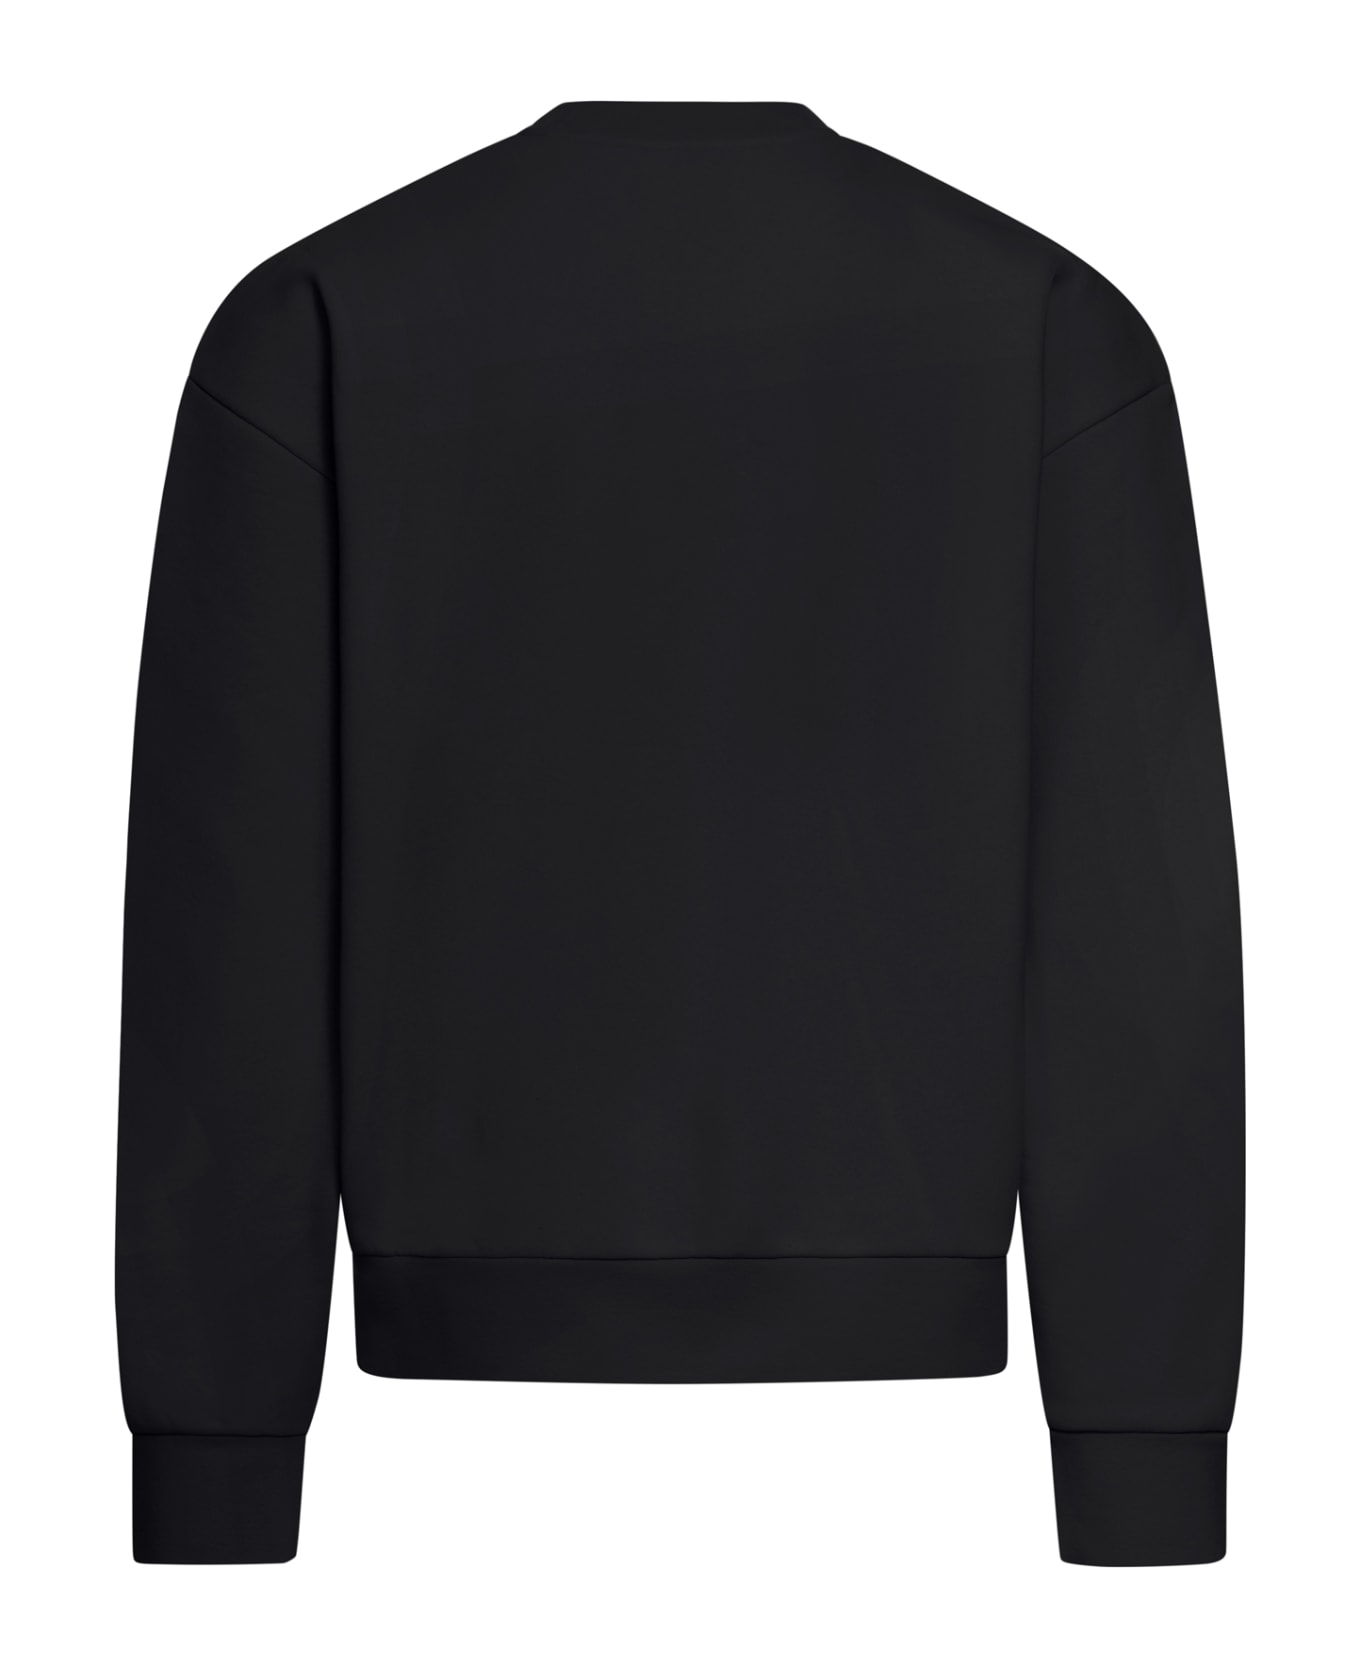 Moncler Genius Sweatshirt - Black